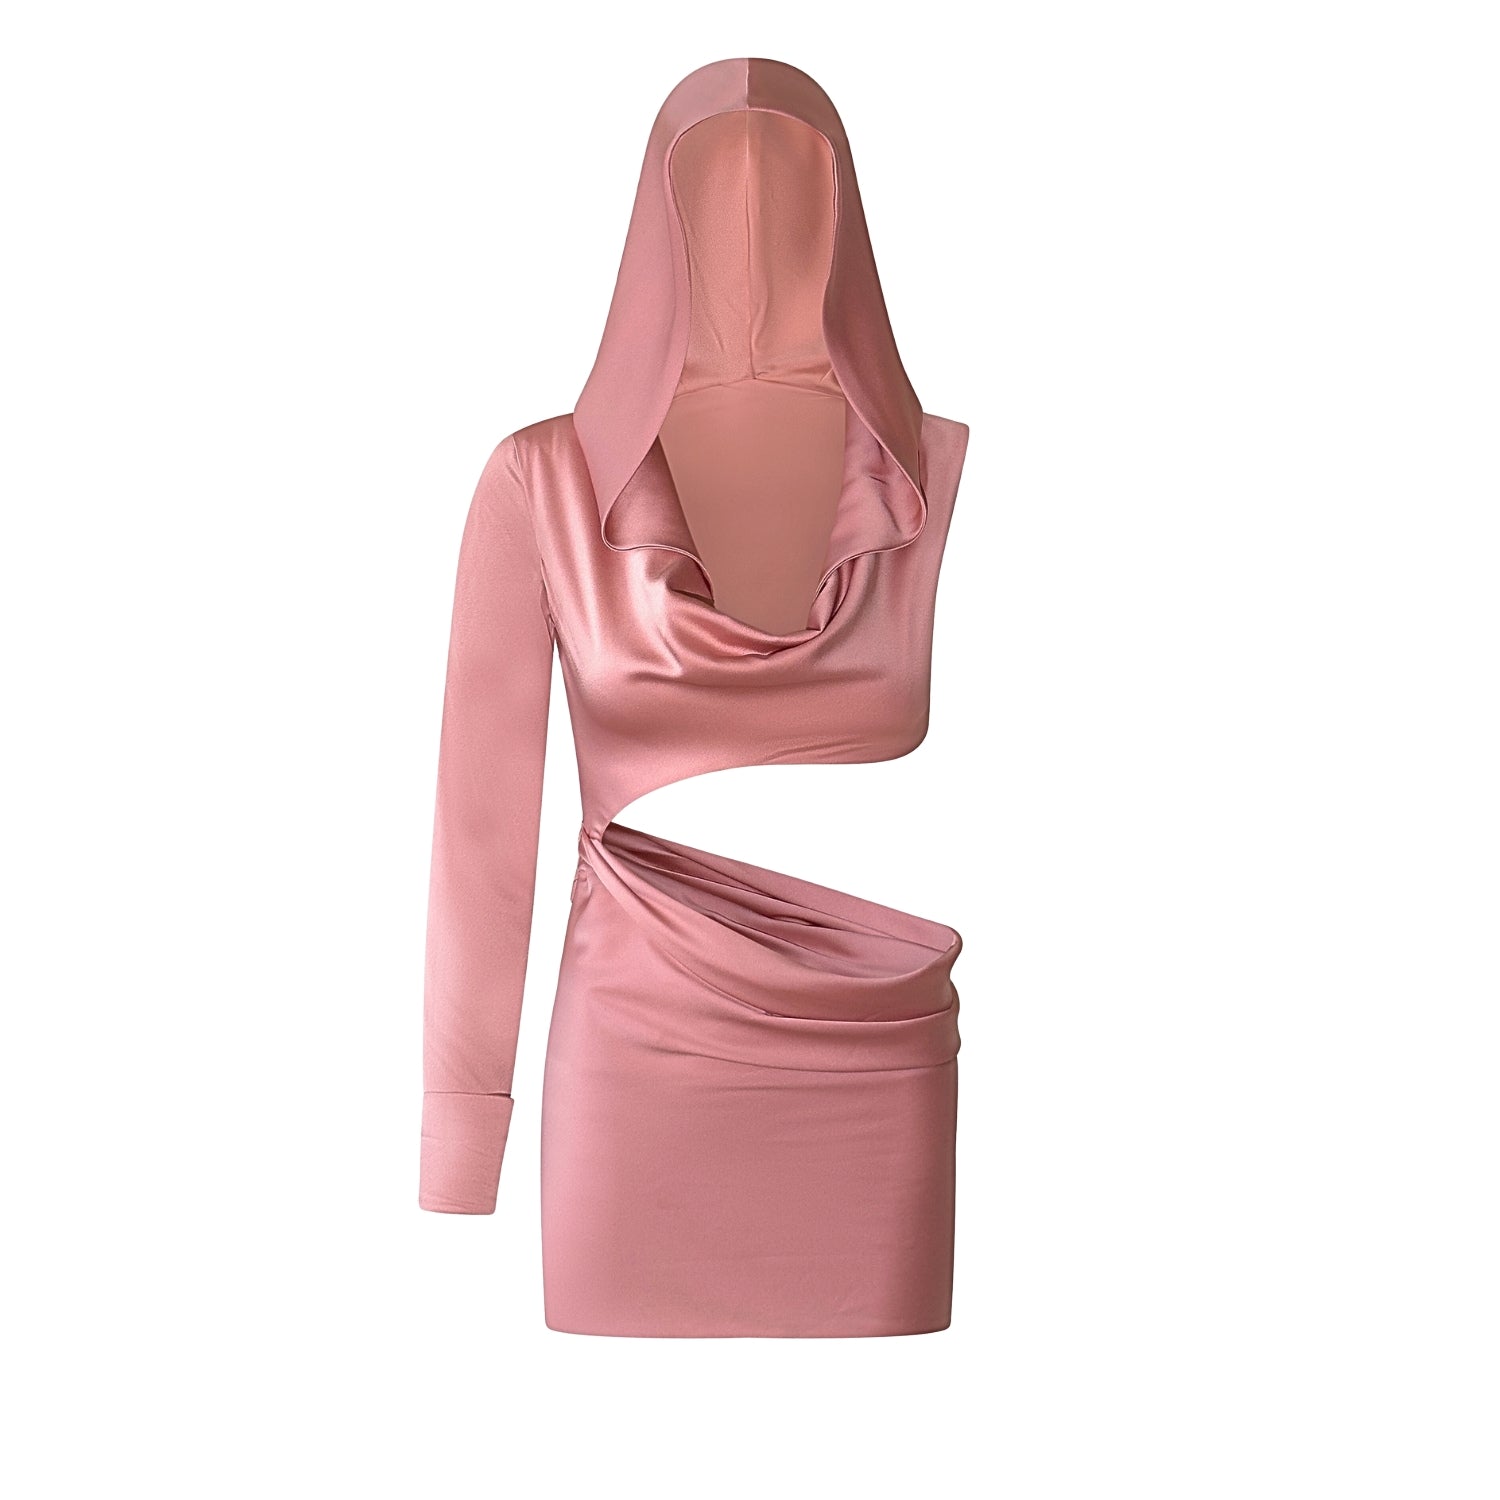 Amore Cutout Hooded Dress